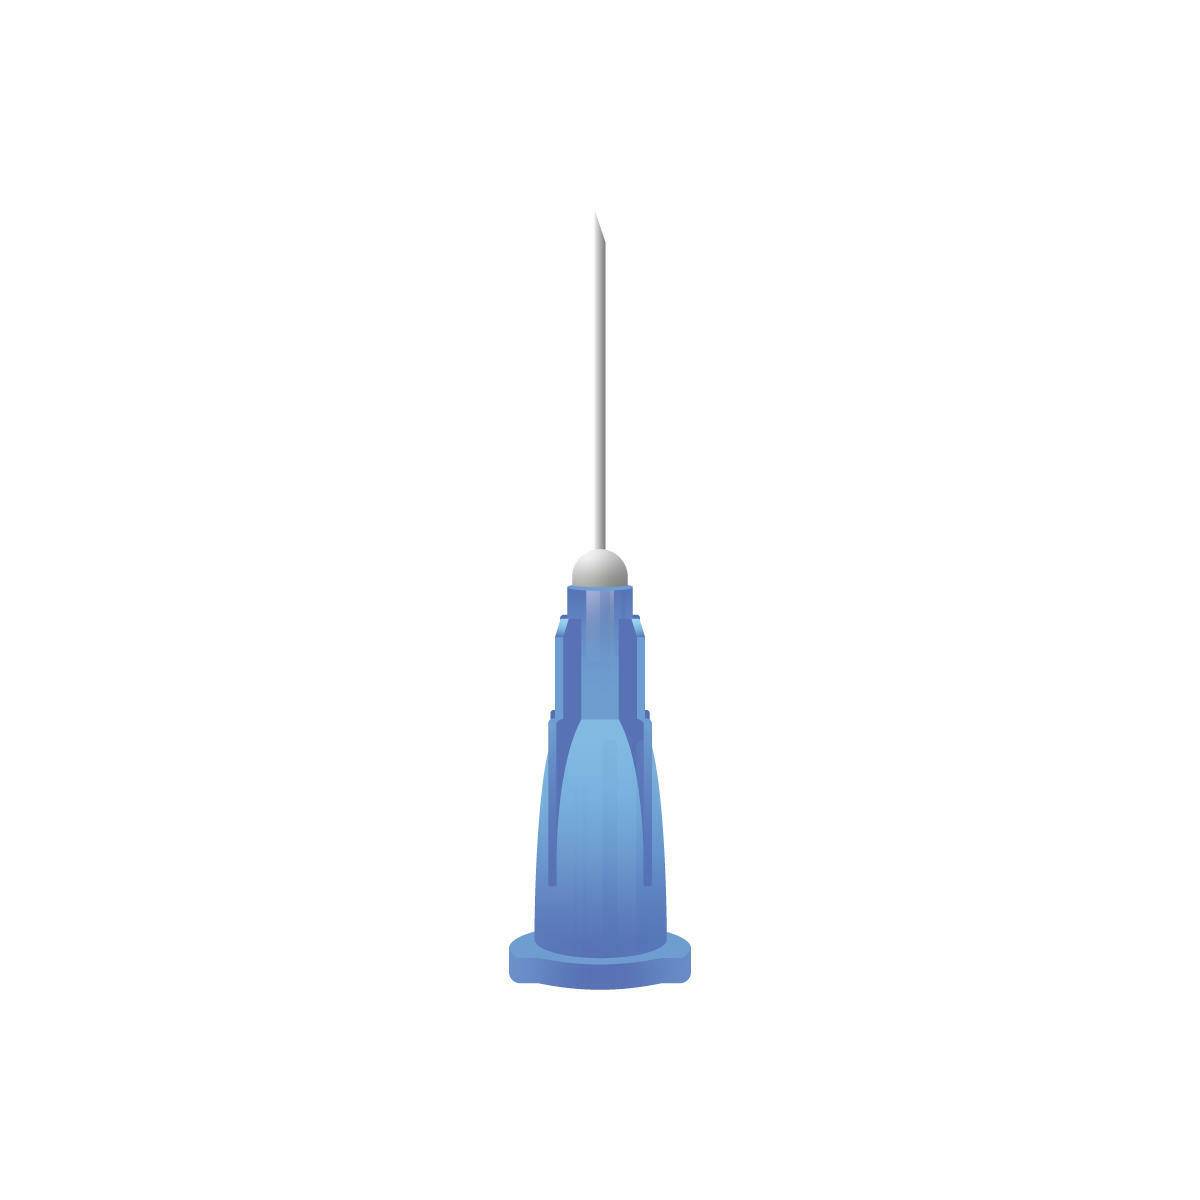 21g 5/8 inch Green Dispovet Veterinary Needles (0.8 x 16mm) - UKMEDI